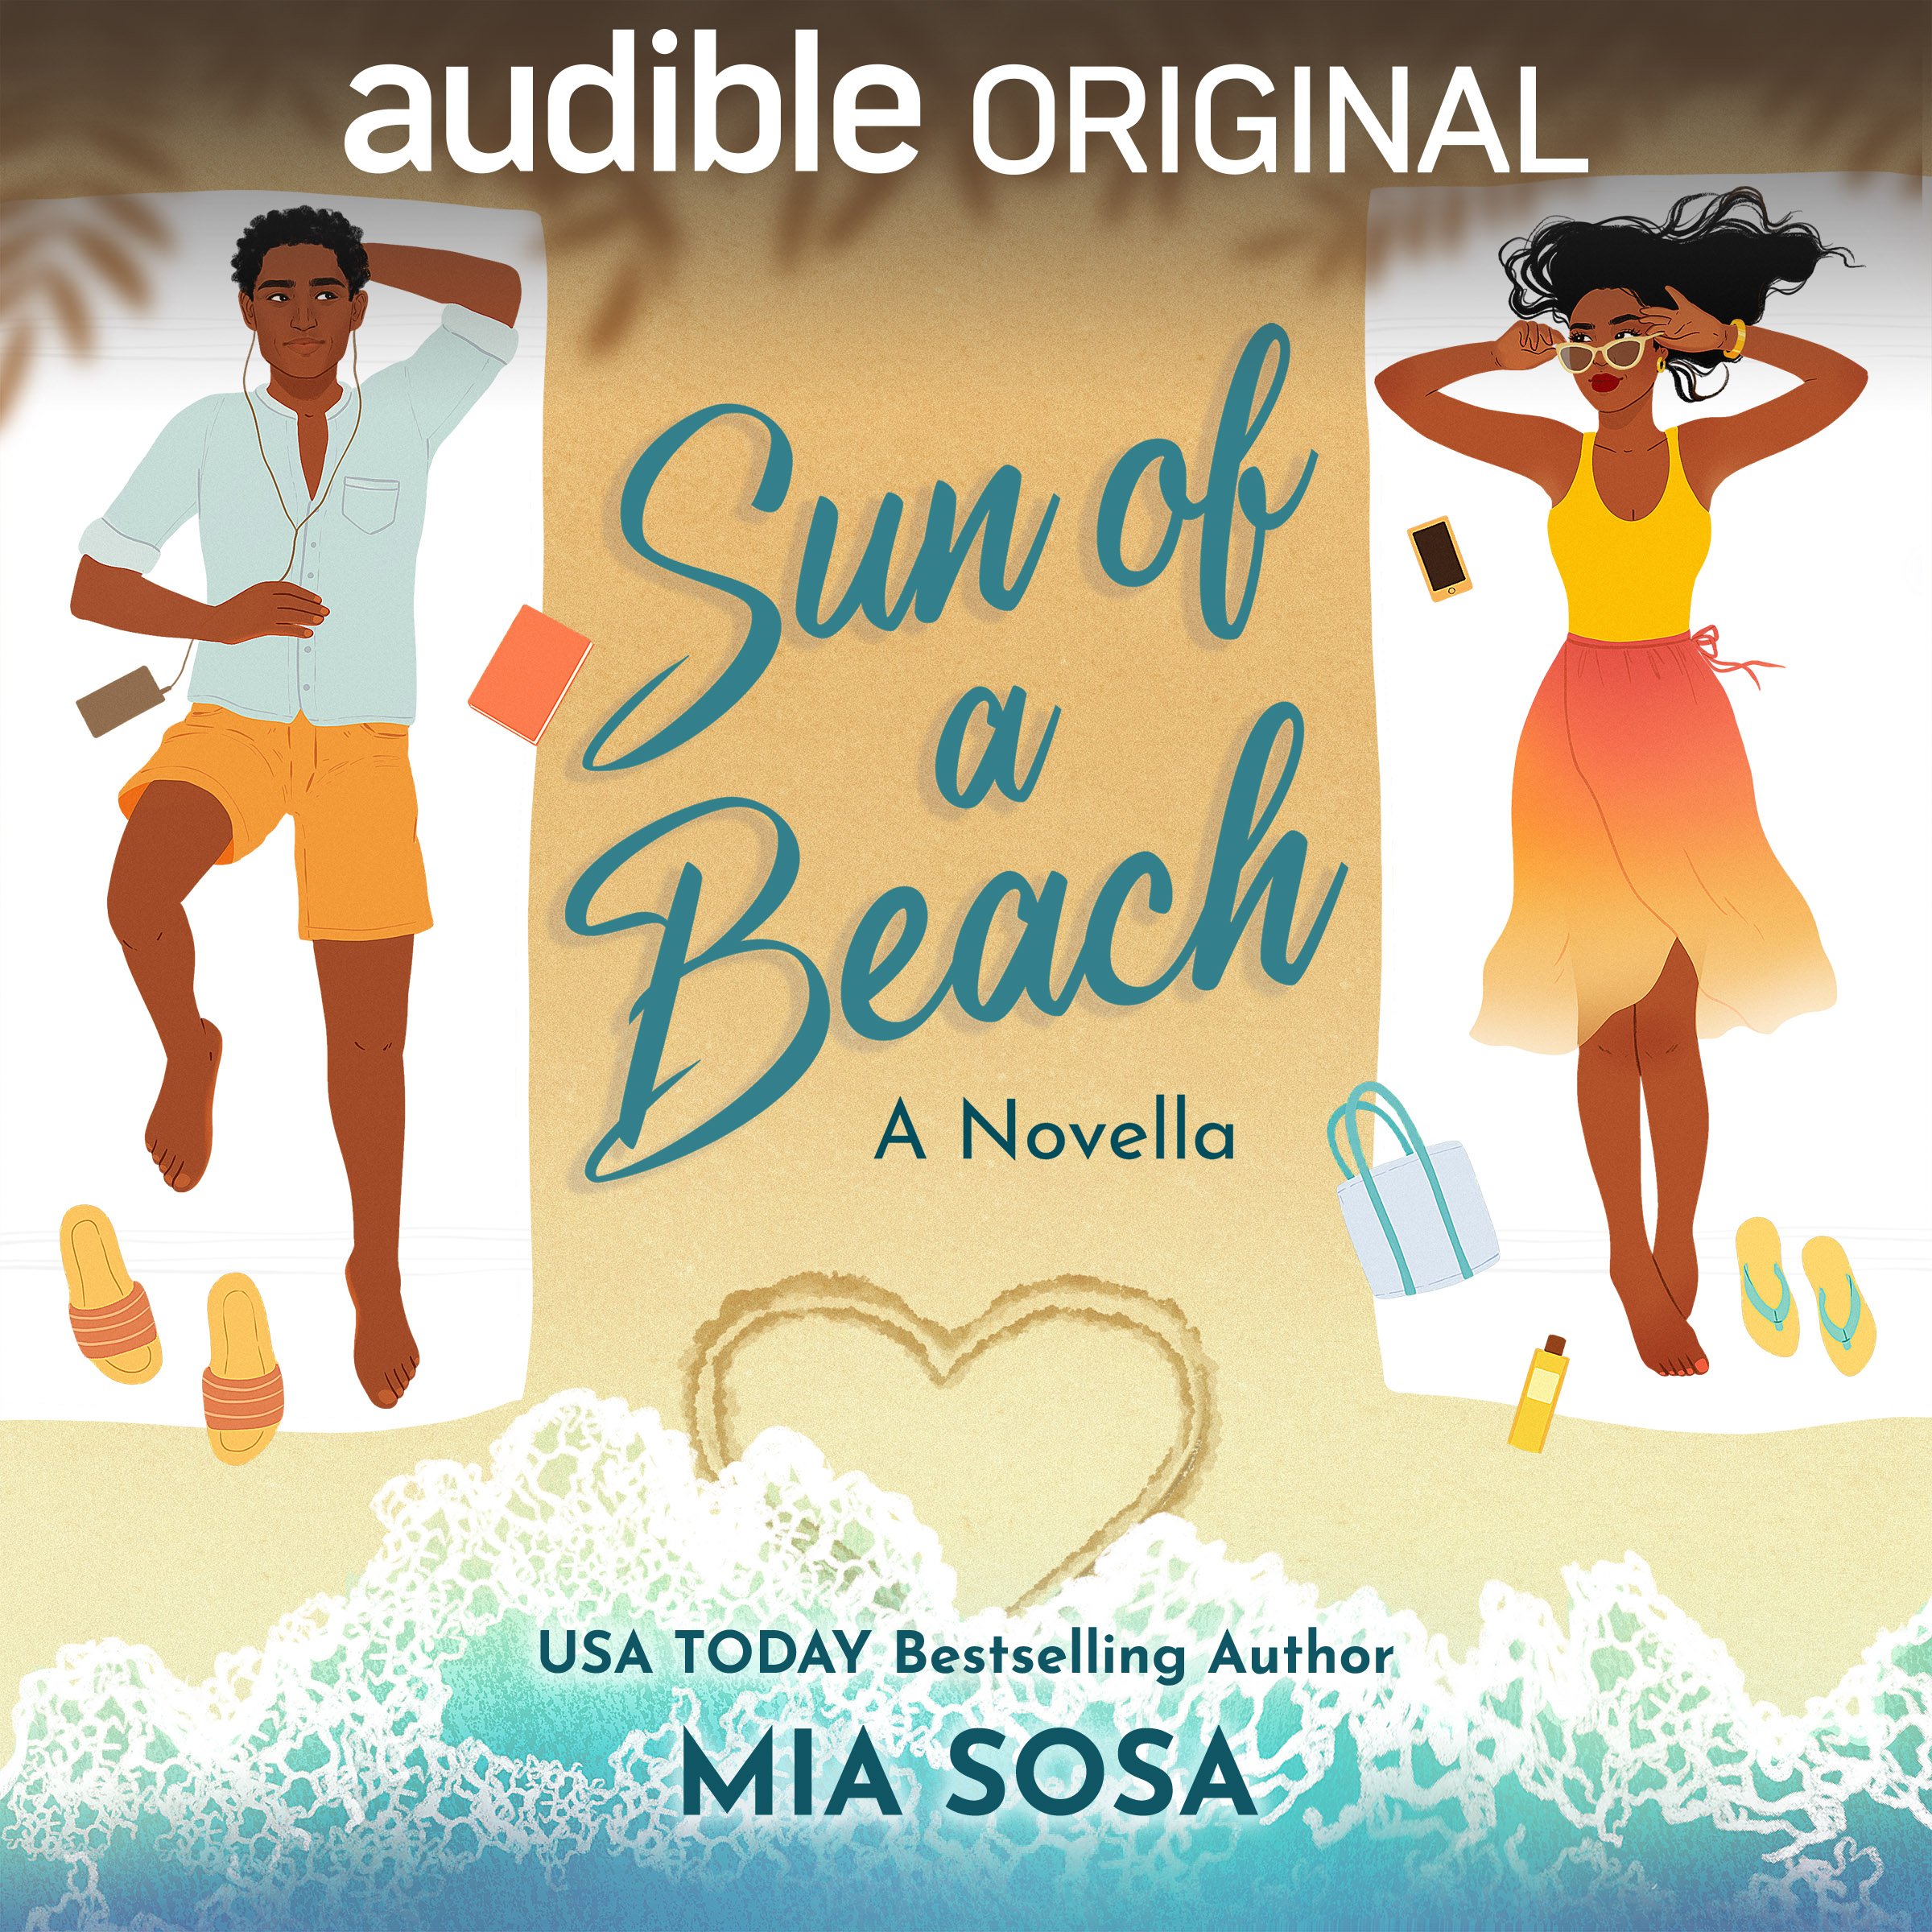 Cover for " Sun of a beach" by Mia Sosa